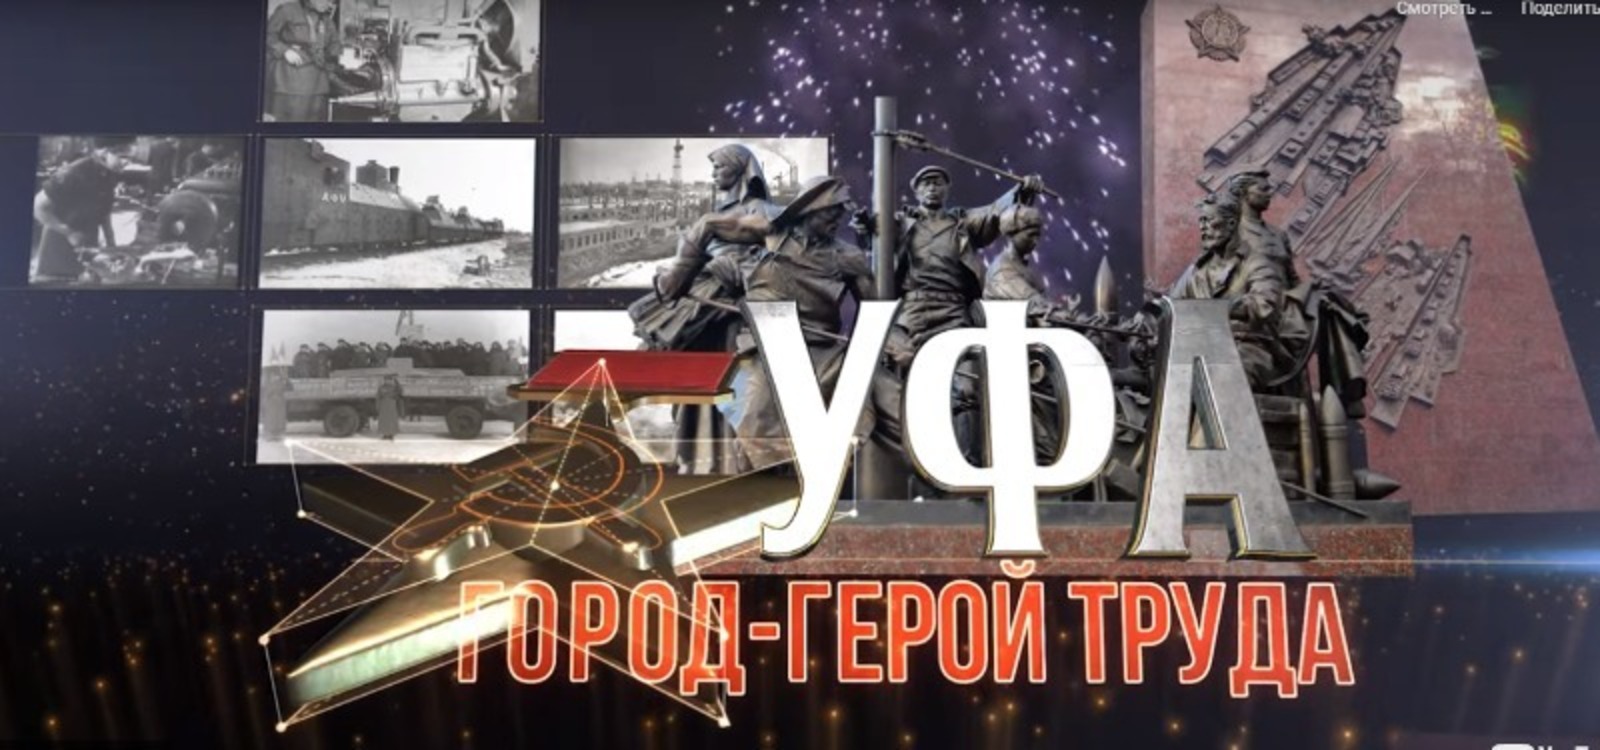 Завтра на телеканале БСТ покажут фильм «Уфа – город-герой труда»